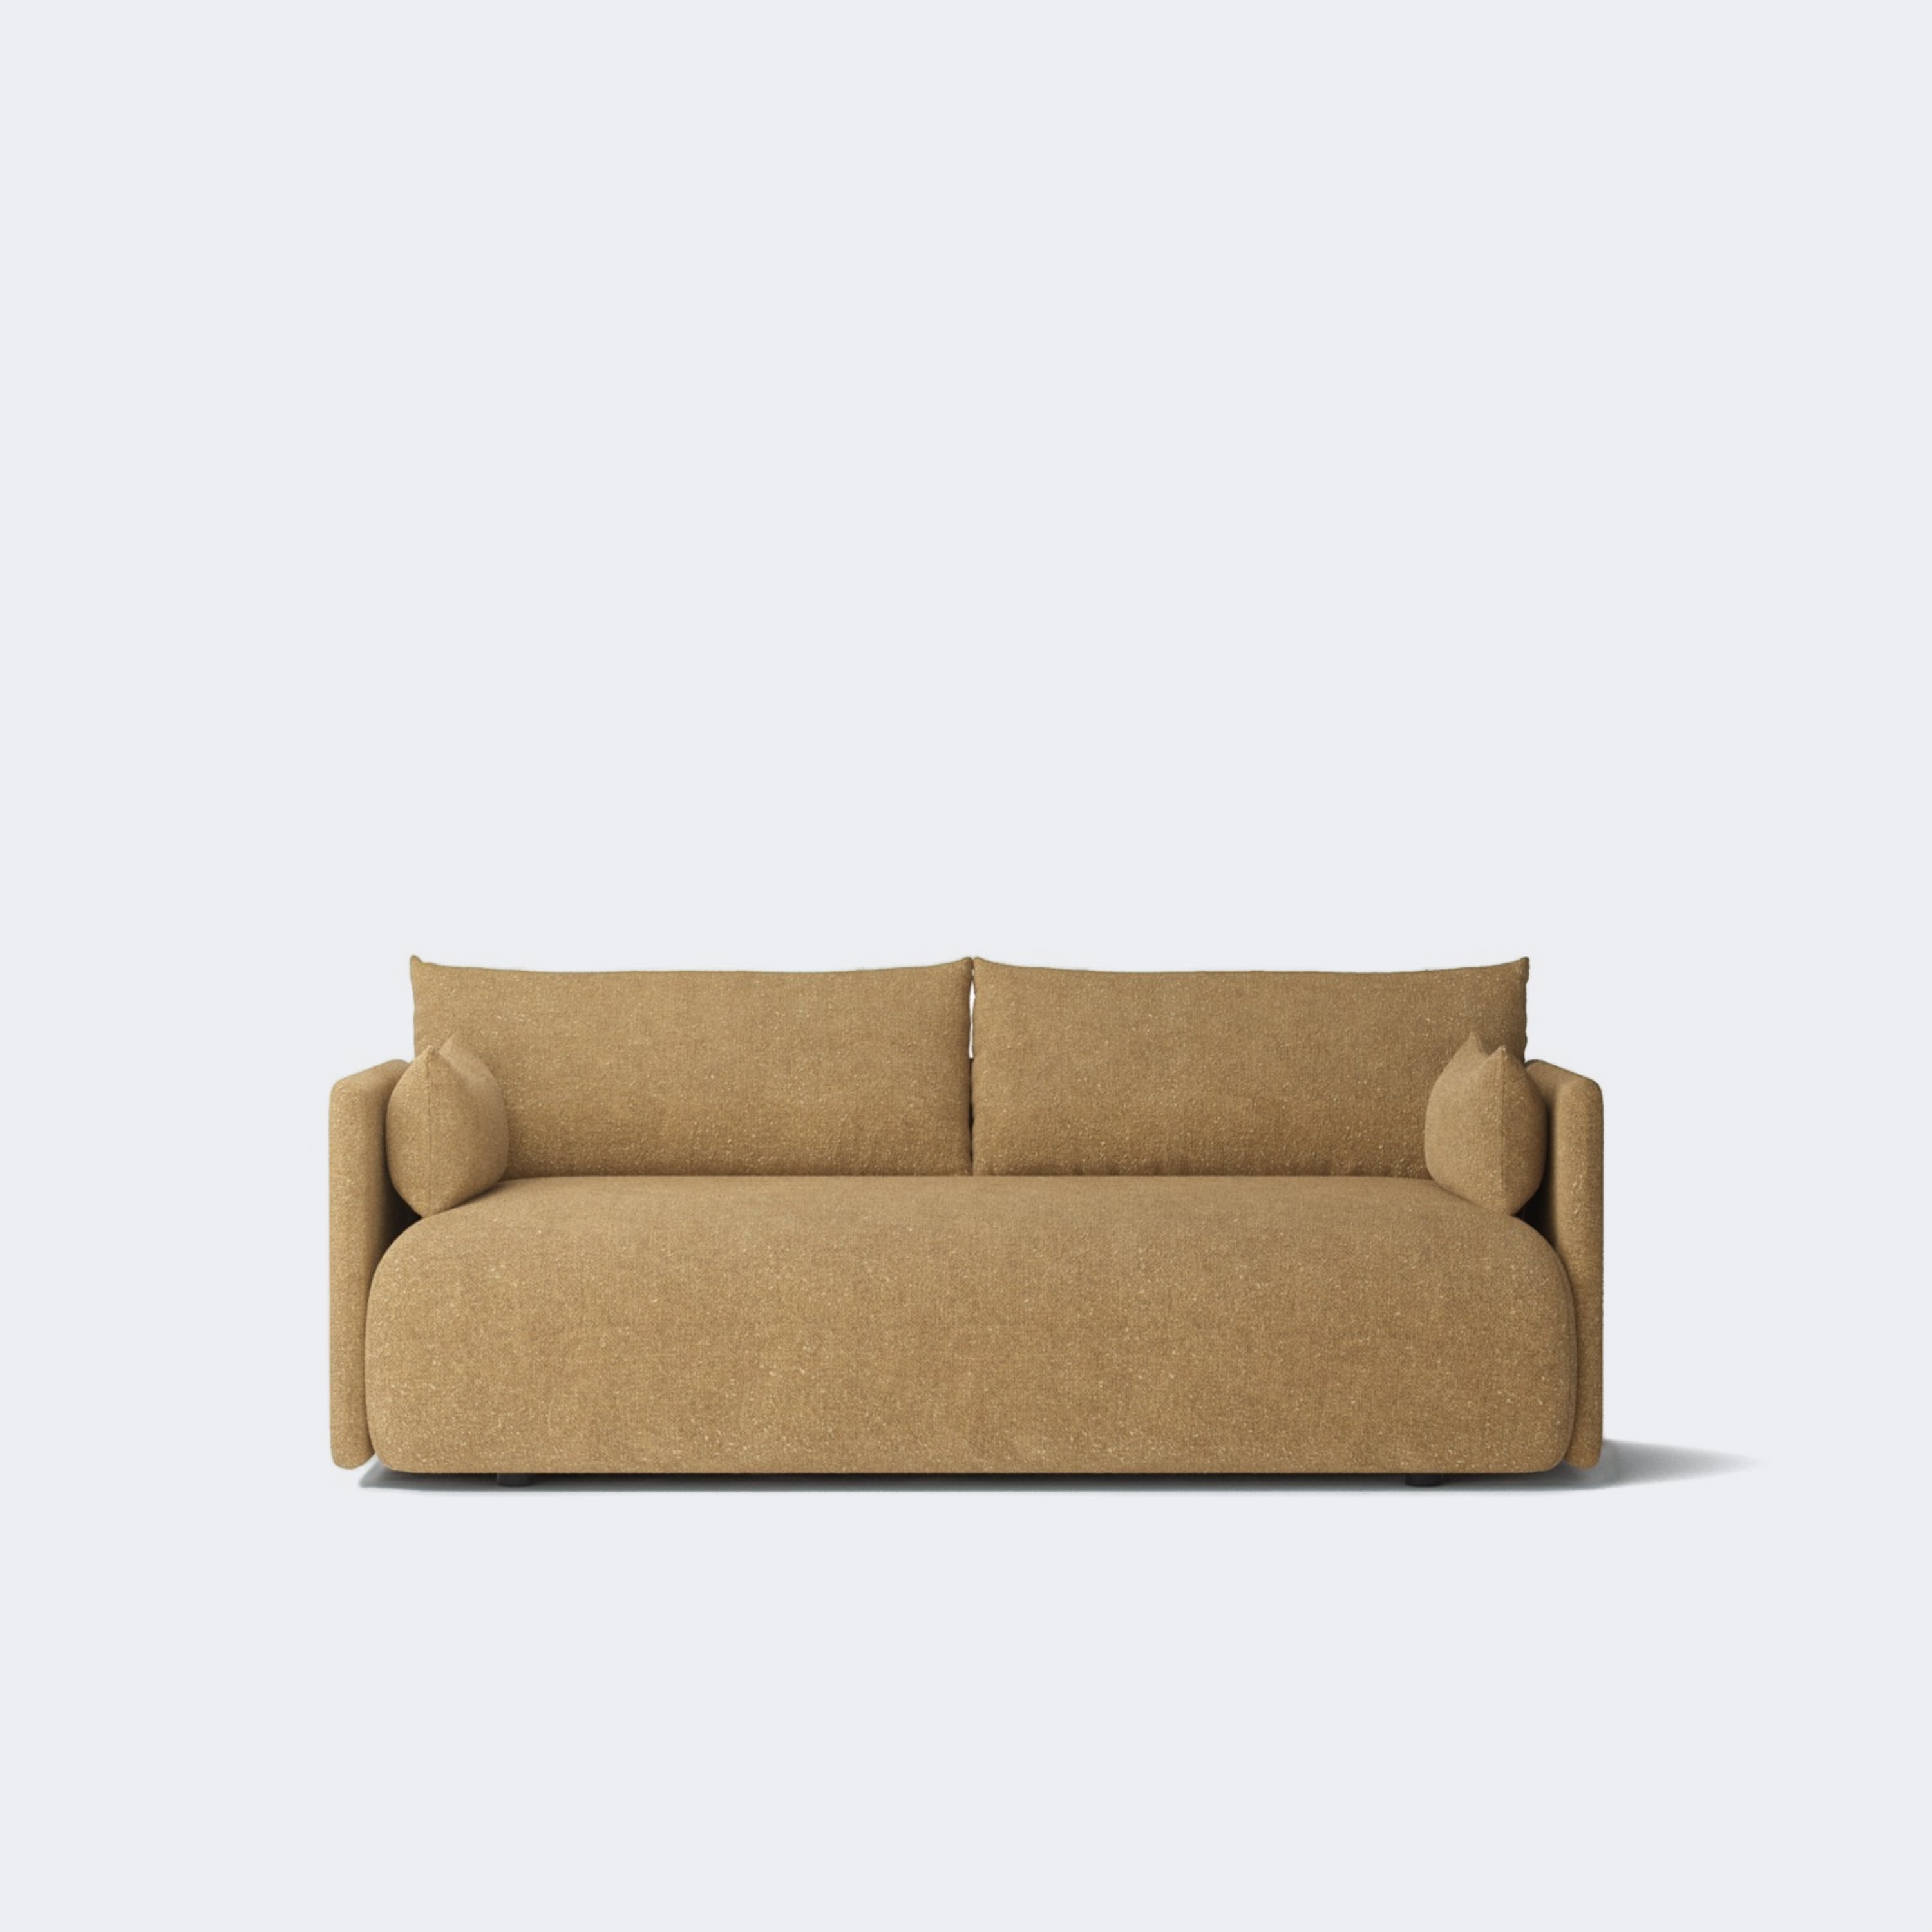 Audo Copenhagen Offset Sofa, 2 Seater Made To Order (12-14 Weeks) Audo Boucle #06 (Gold) - KANSO